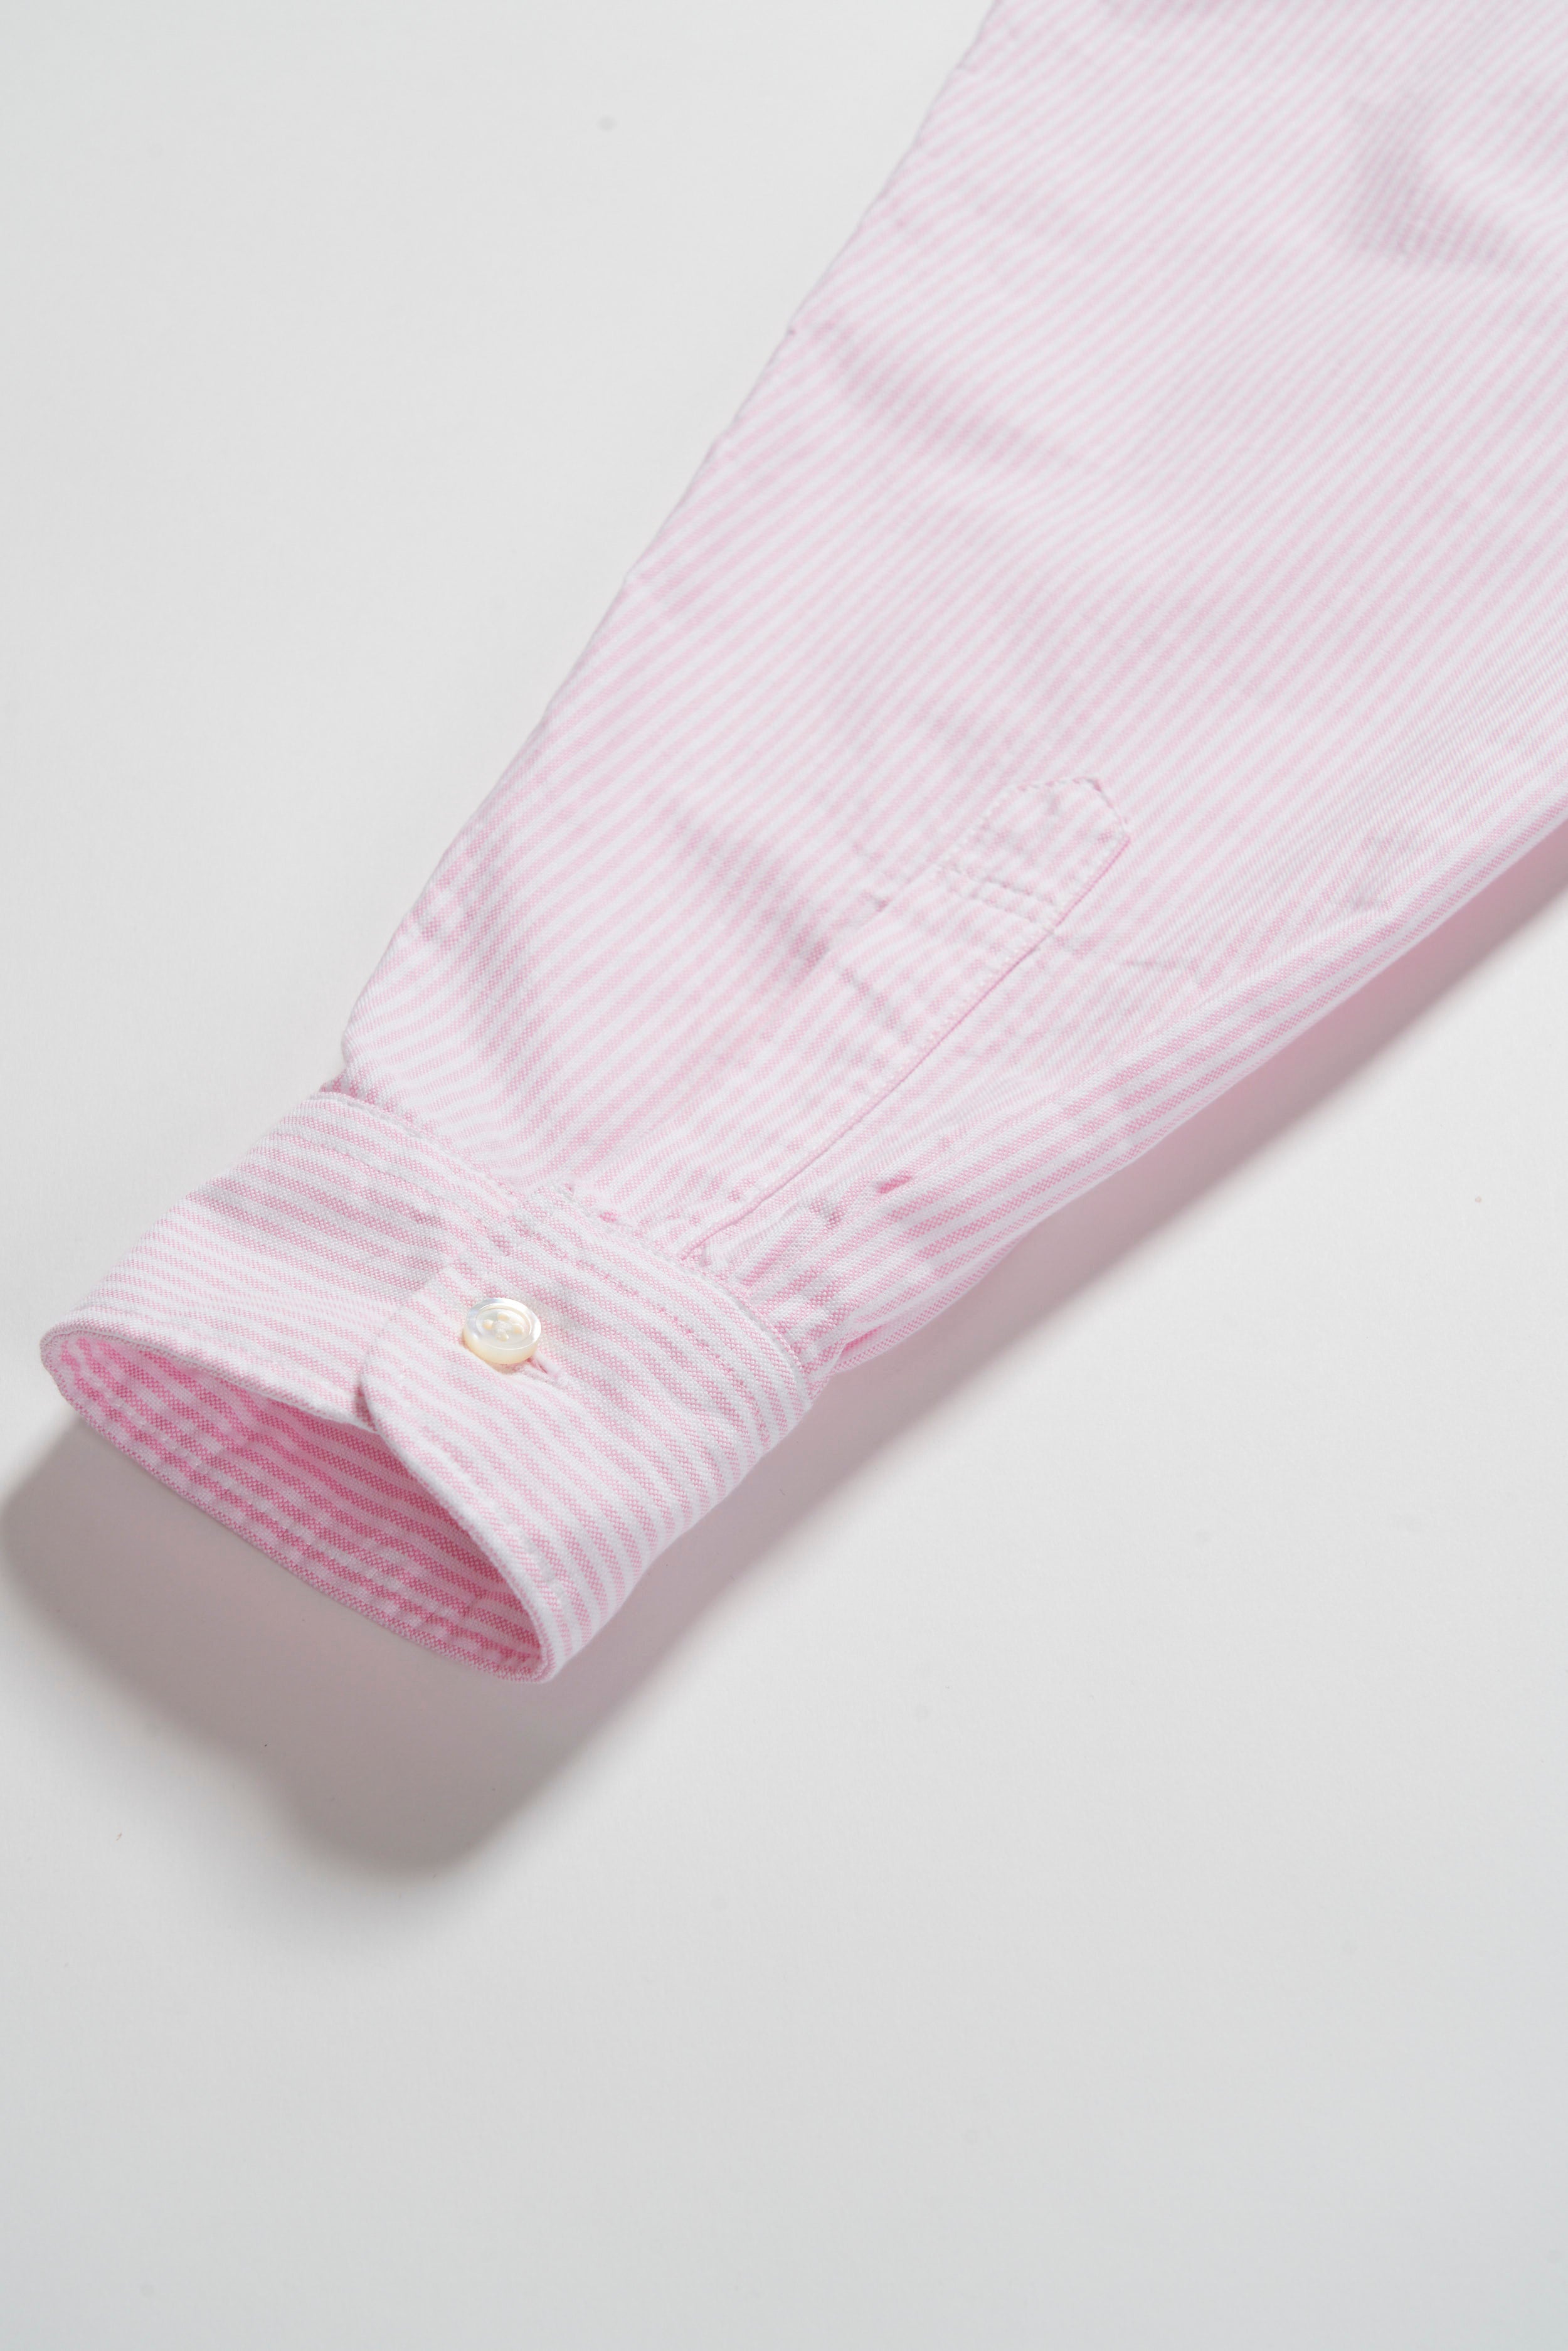 Engineered Garments IVY BD Shirt - Pink Candy Stripe Oxford